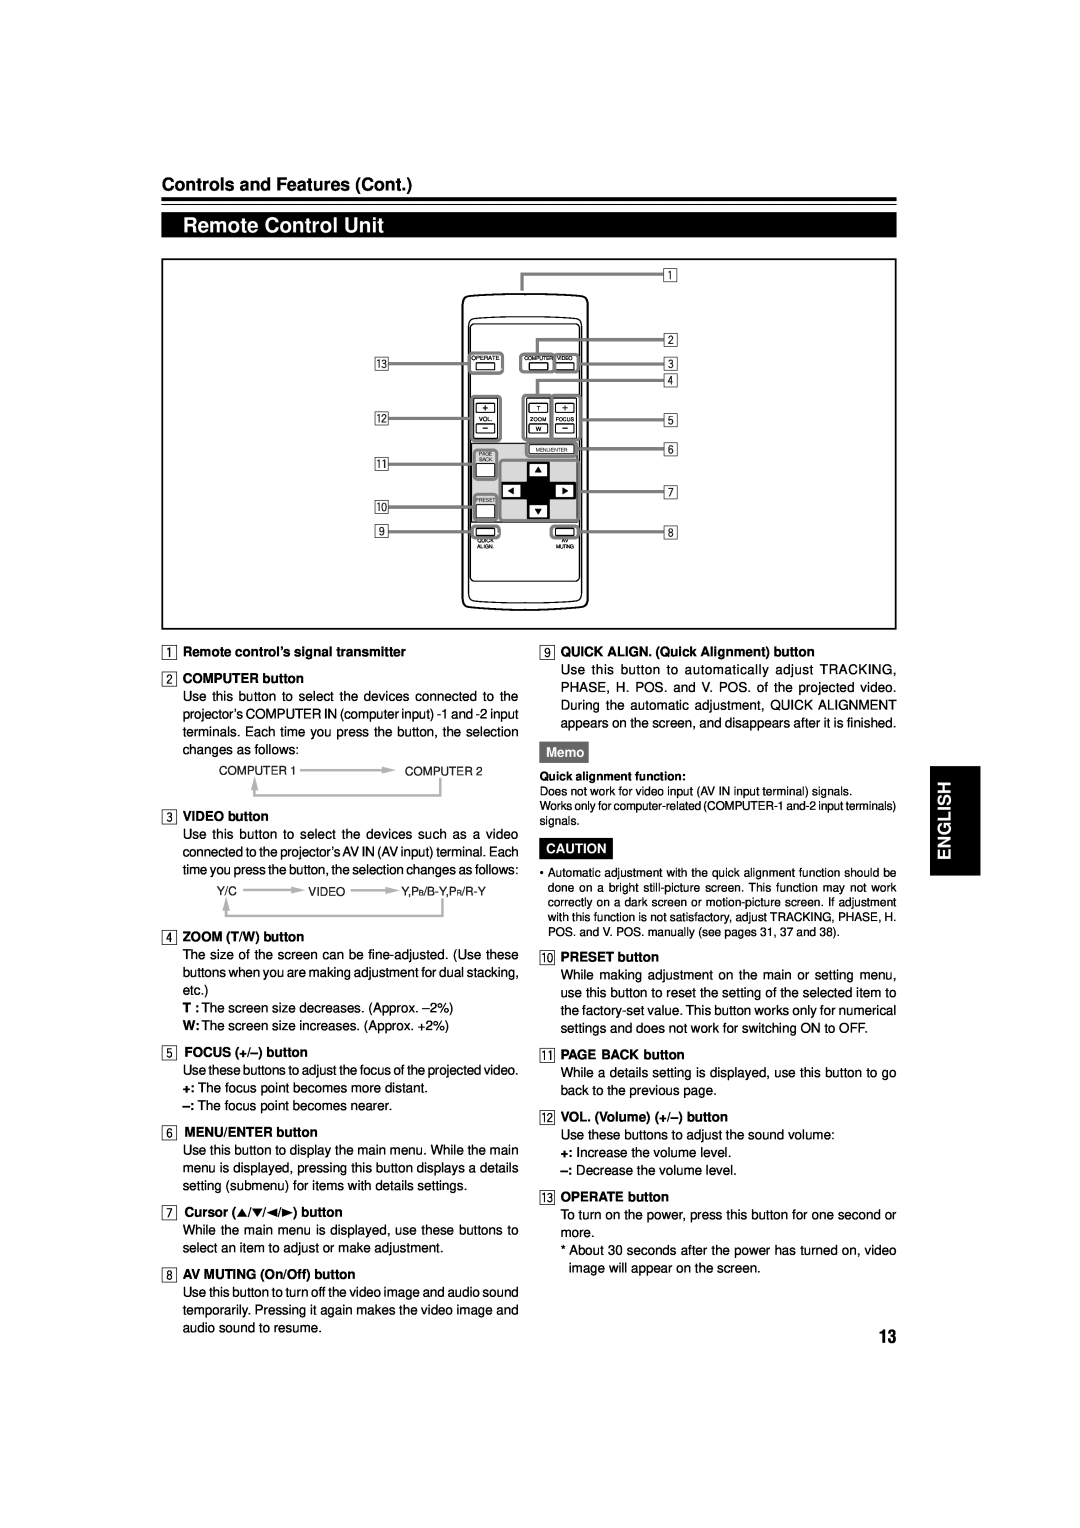 JVC DLA-M15U manual Remote Control Unit, Controls and Features Cont, English, w q p, VIDEO button, ZOOM T/W button, Memo 